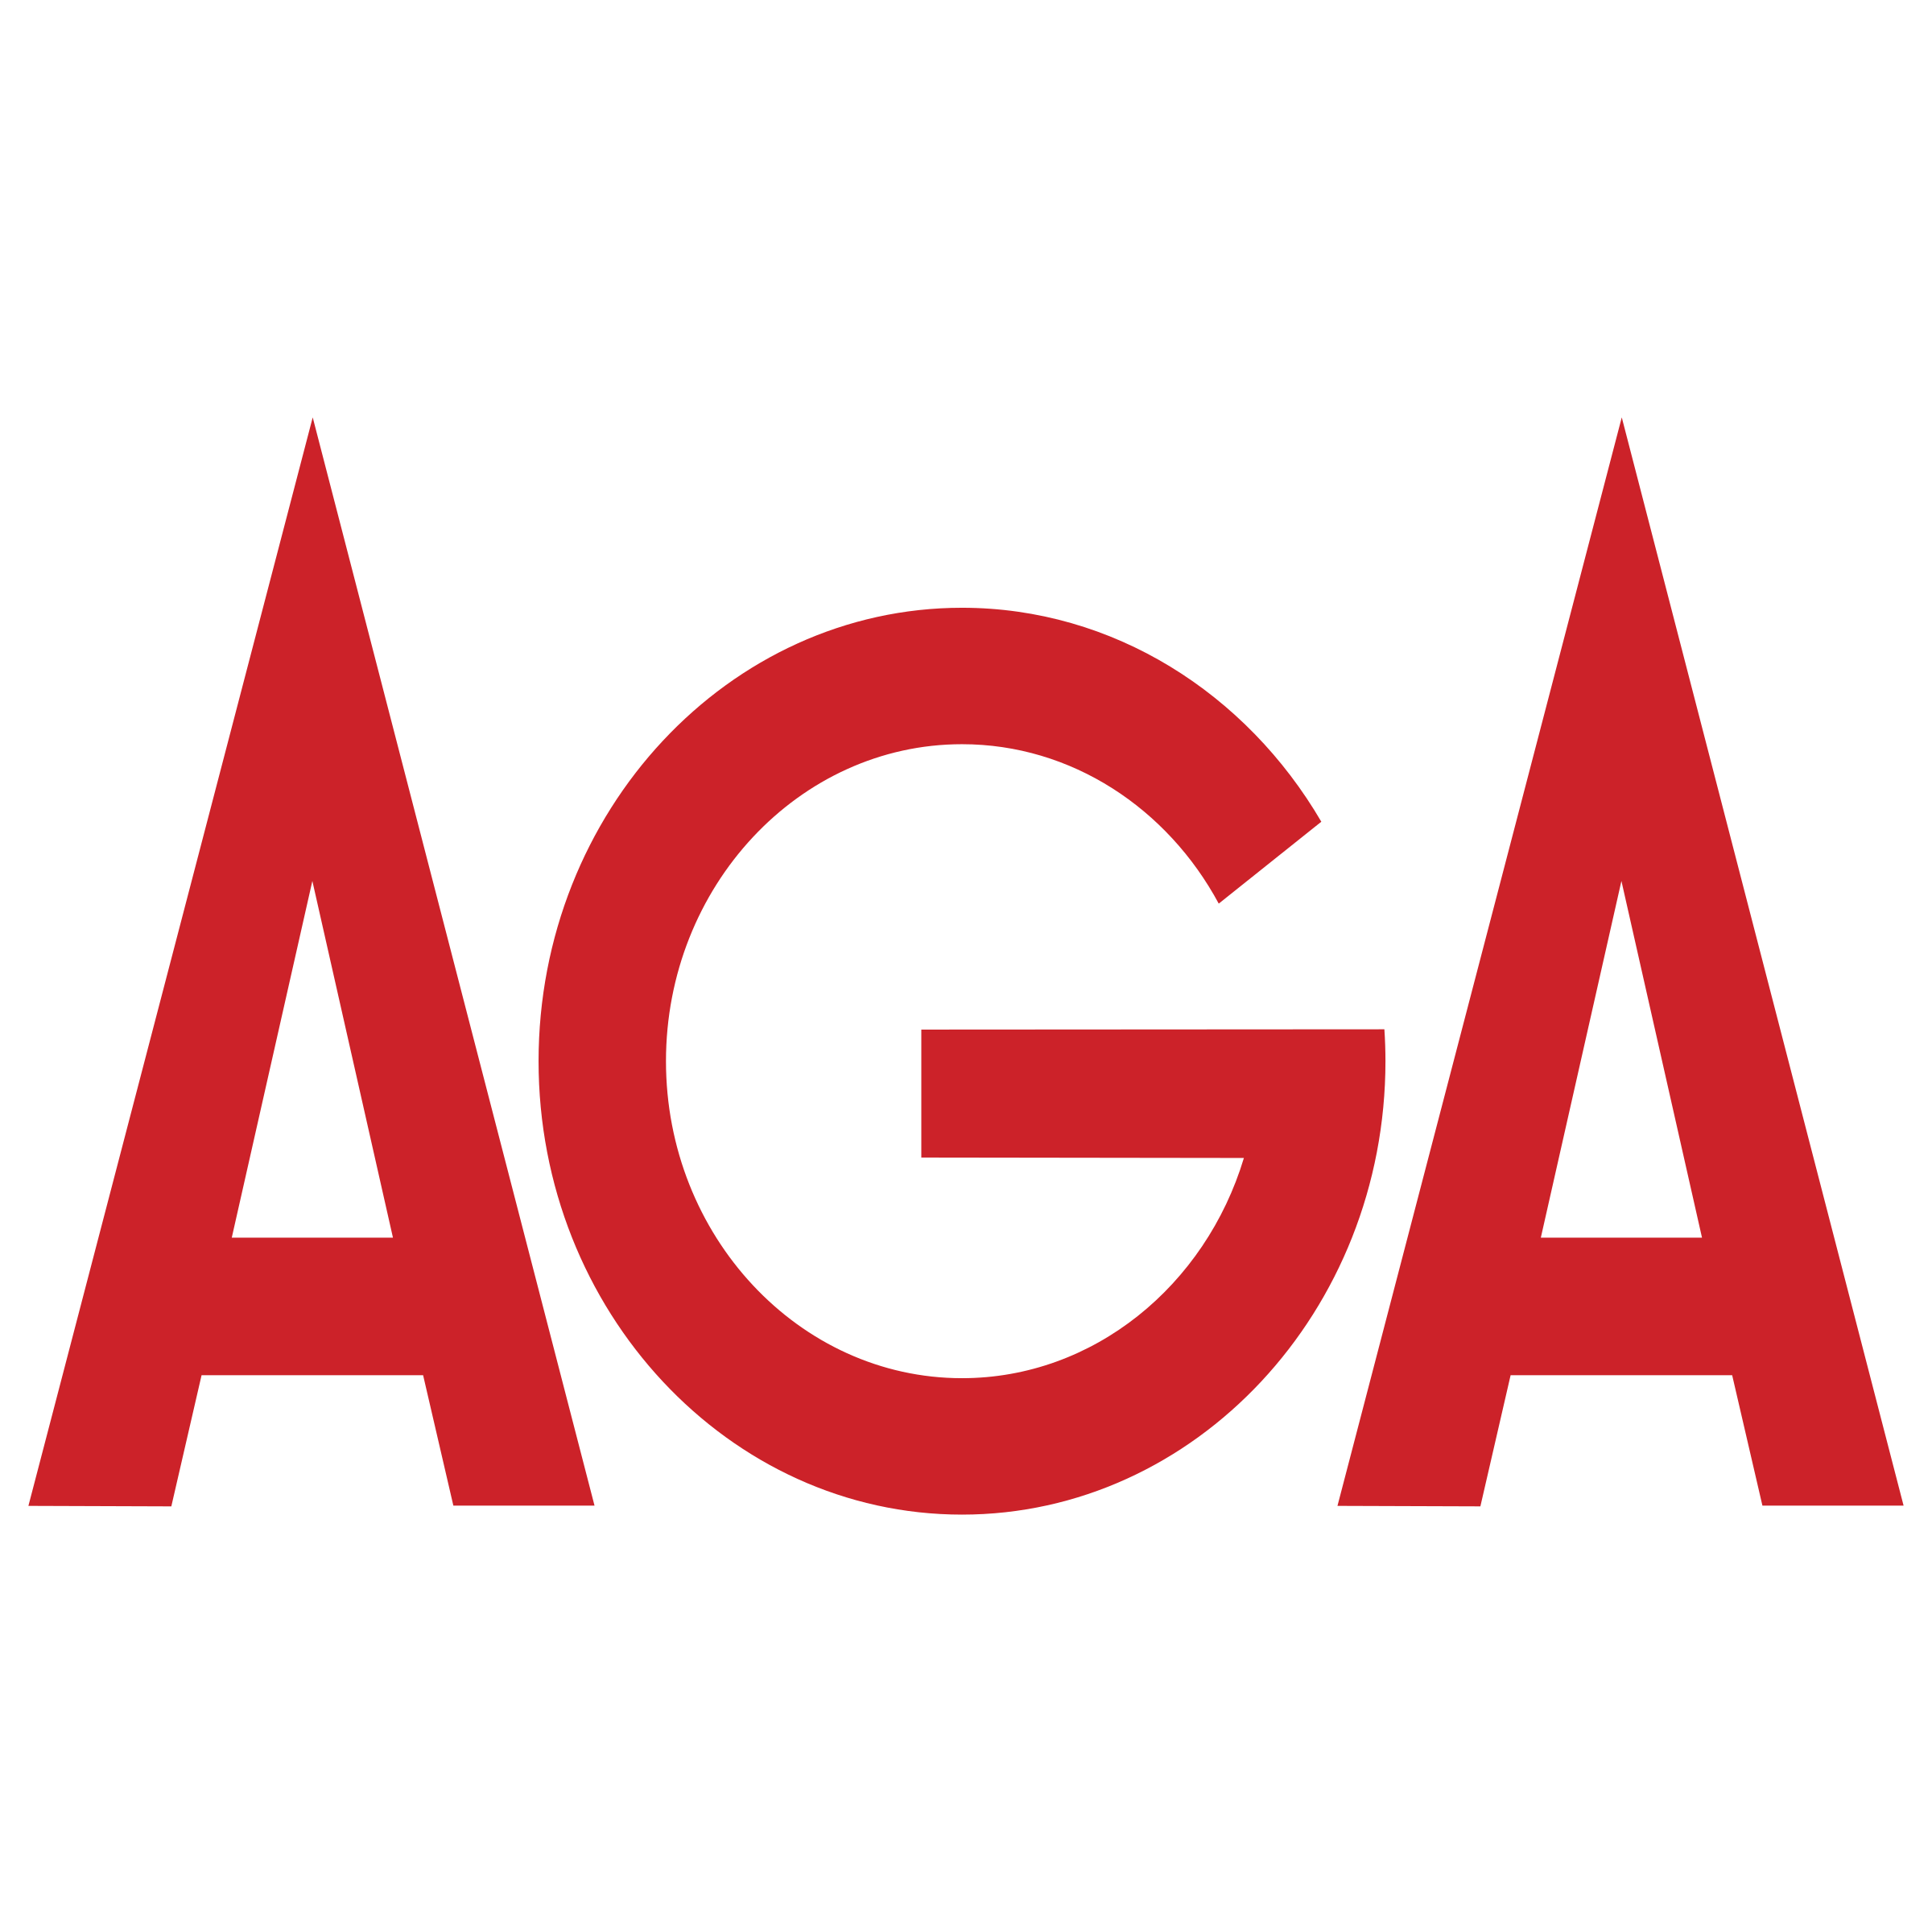 Aga Logo - Aga Logo PNG Transparent & SVG Vector - Freebie Supply